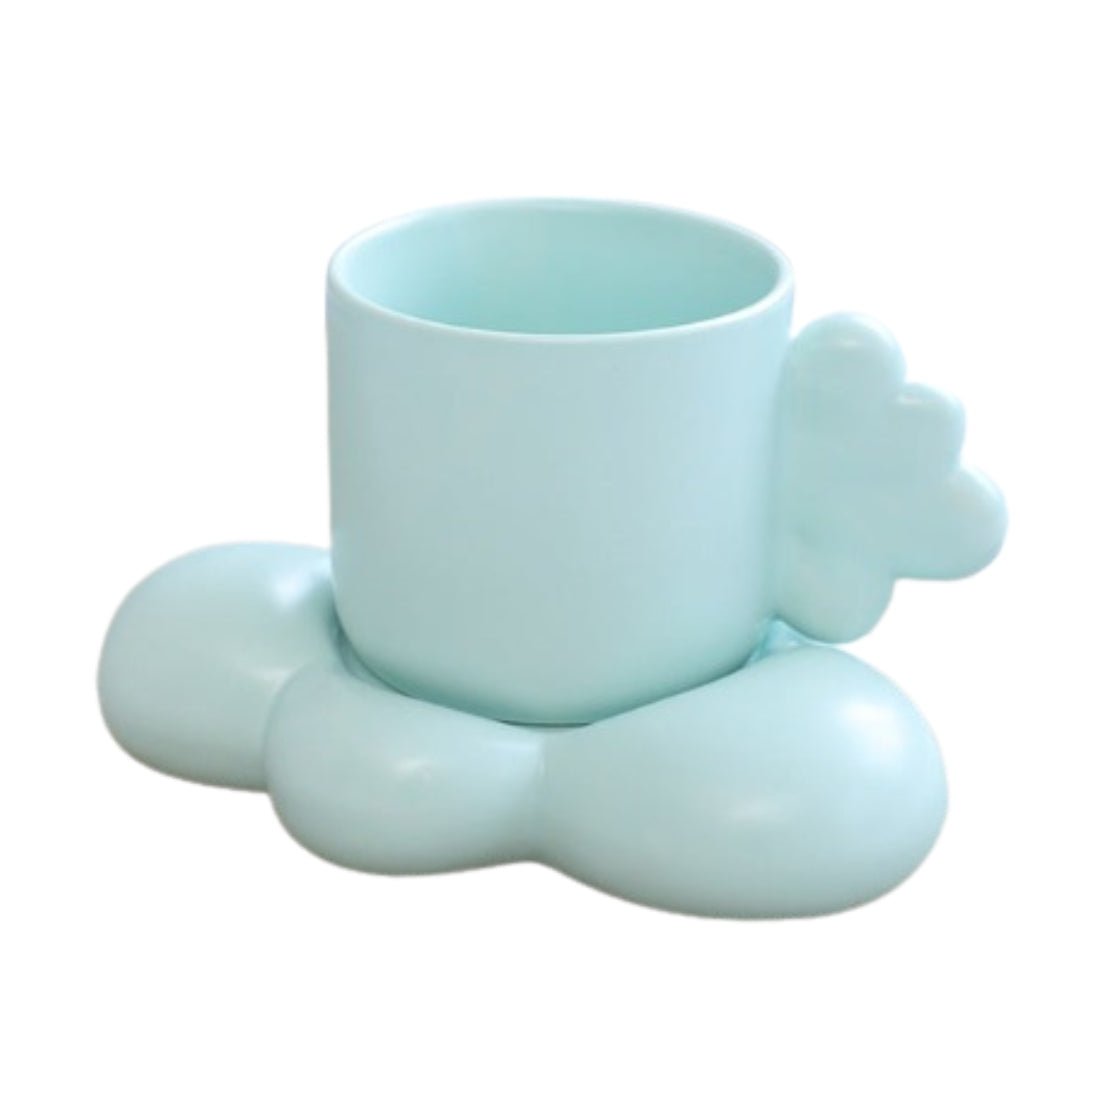 Blue ceramic mug with cloud handle and saucer